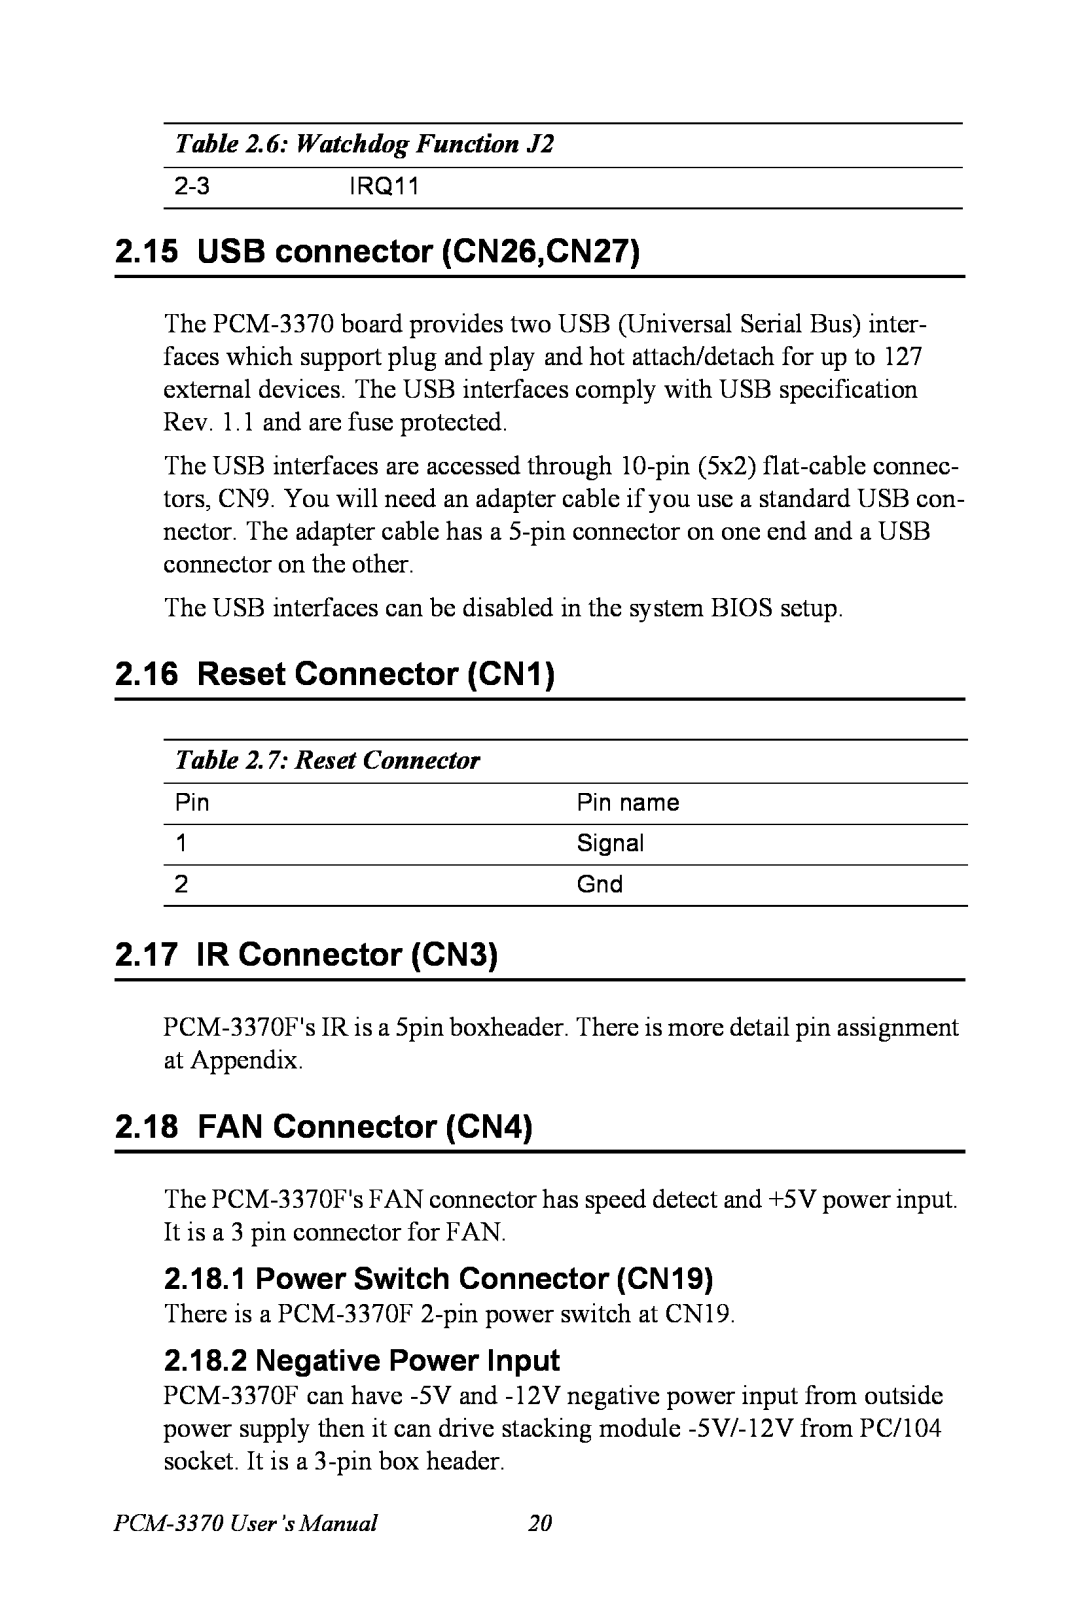 Intel PCM-3370 USB connector CN26,CN27, Reset Connector CN1, IR Connector CN3, FAN Connector CN4, Negative Power Input 